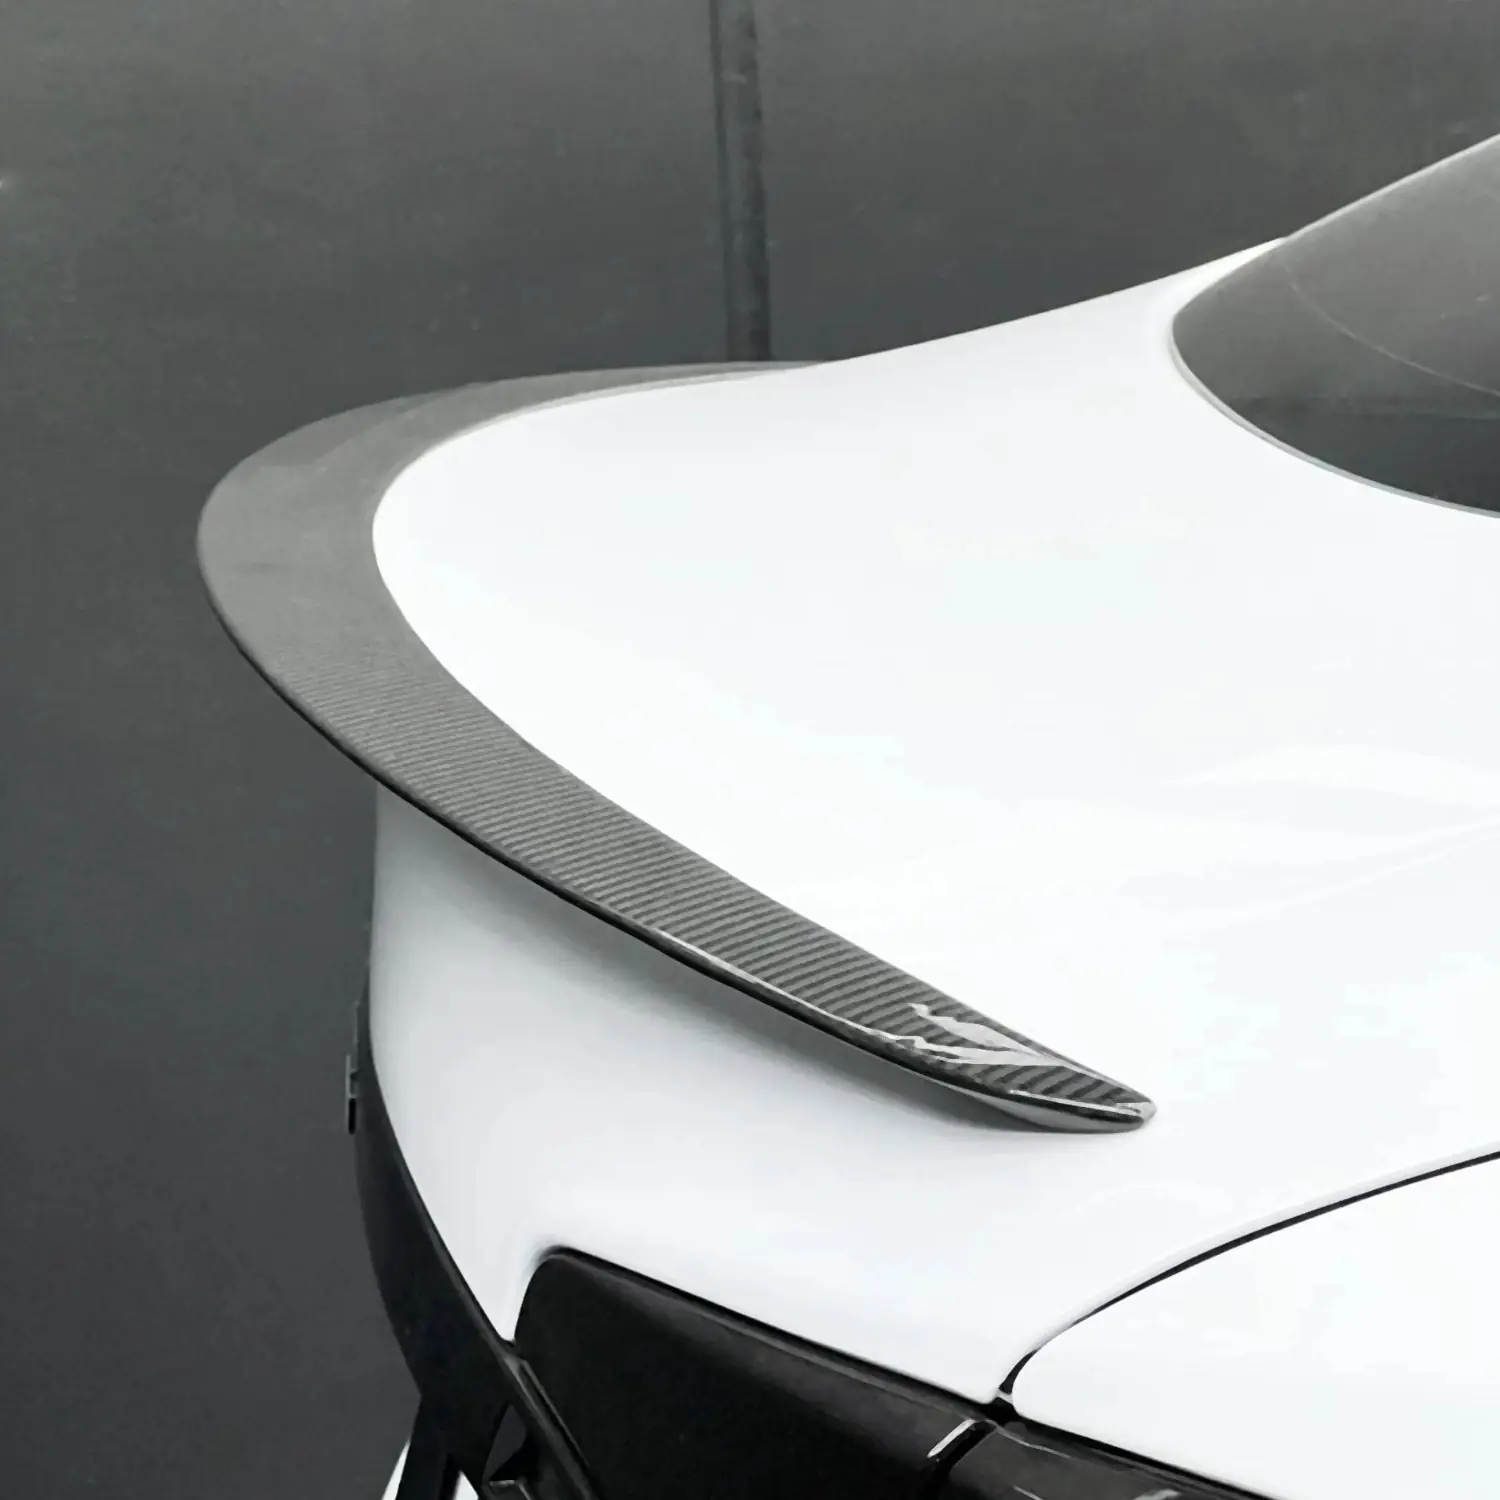 Tesla Model S Dry Carbon Fiber Performance Rear Spoiler